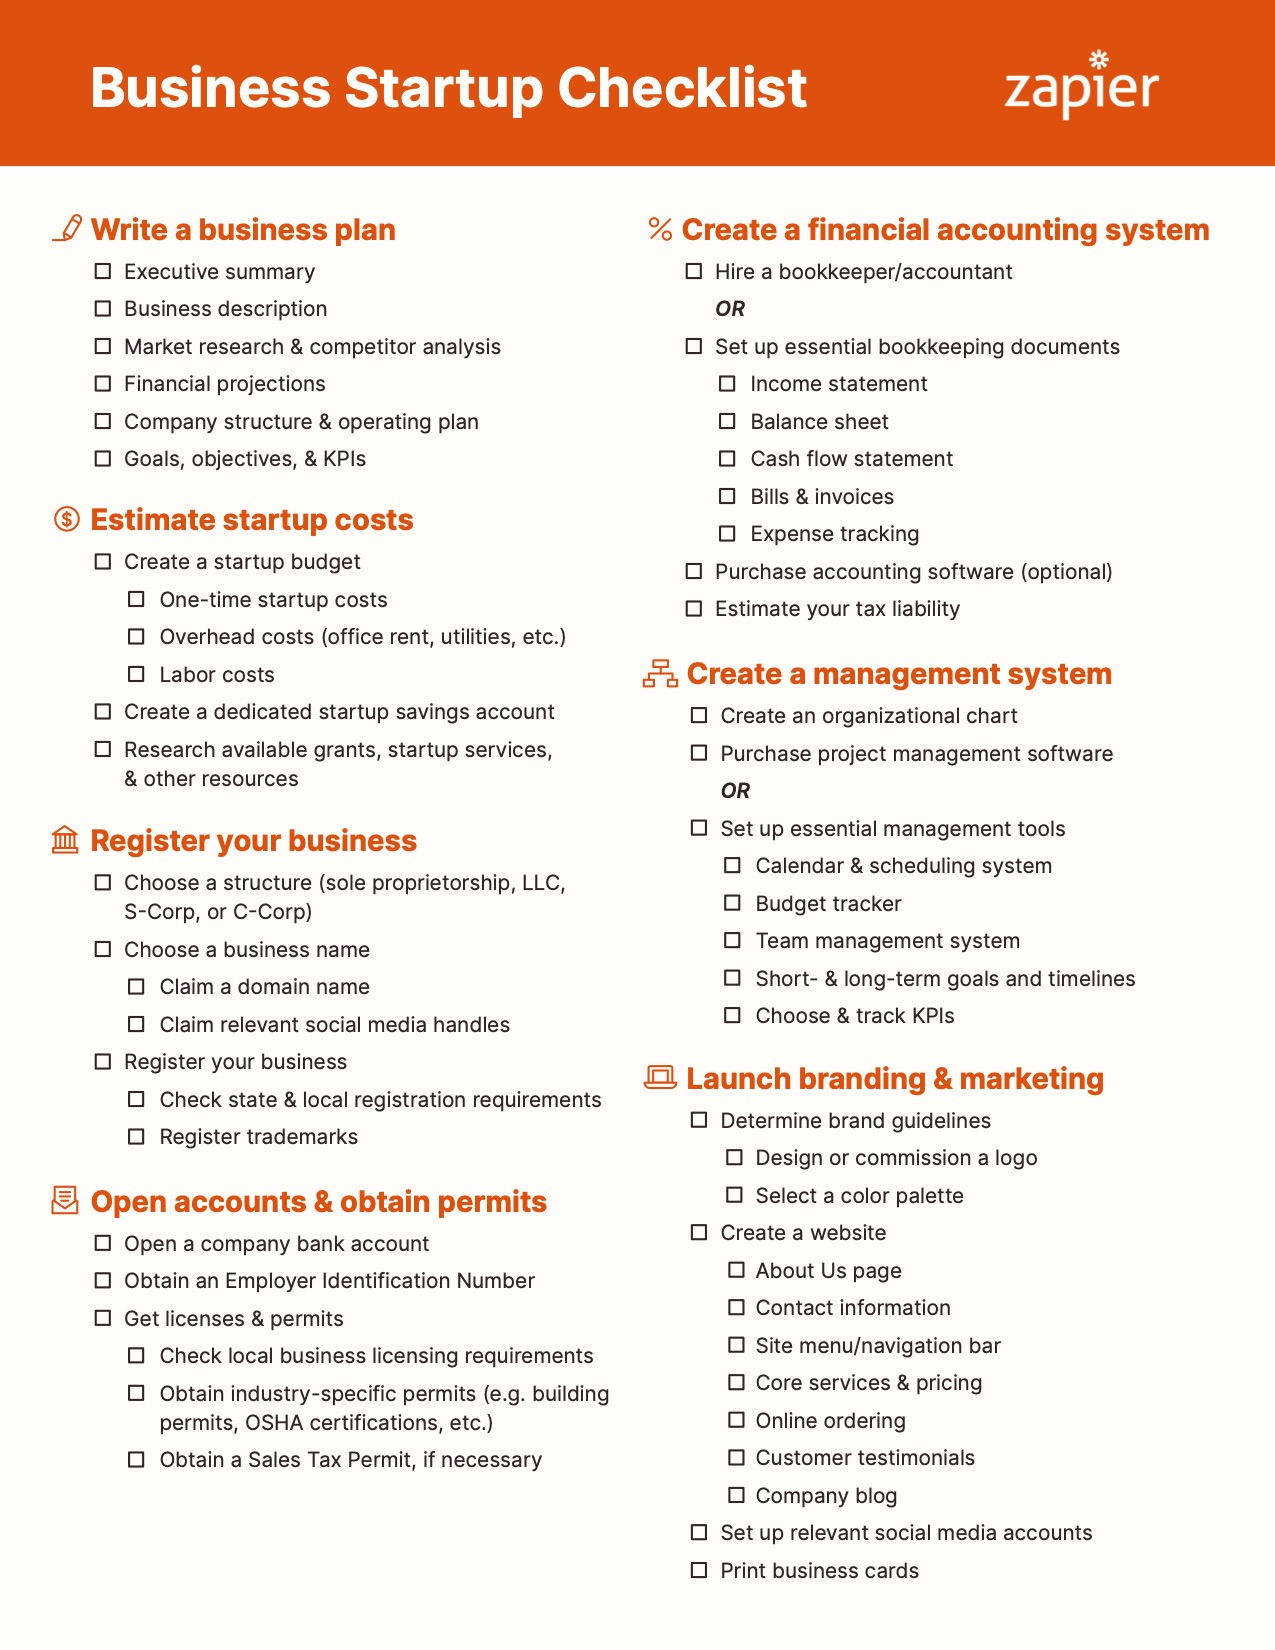 starting my own business checklist